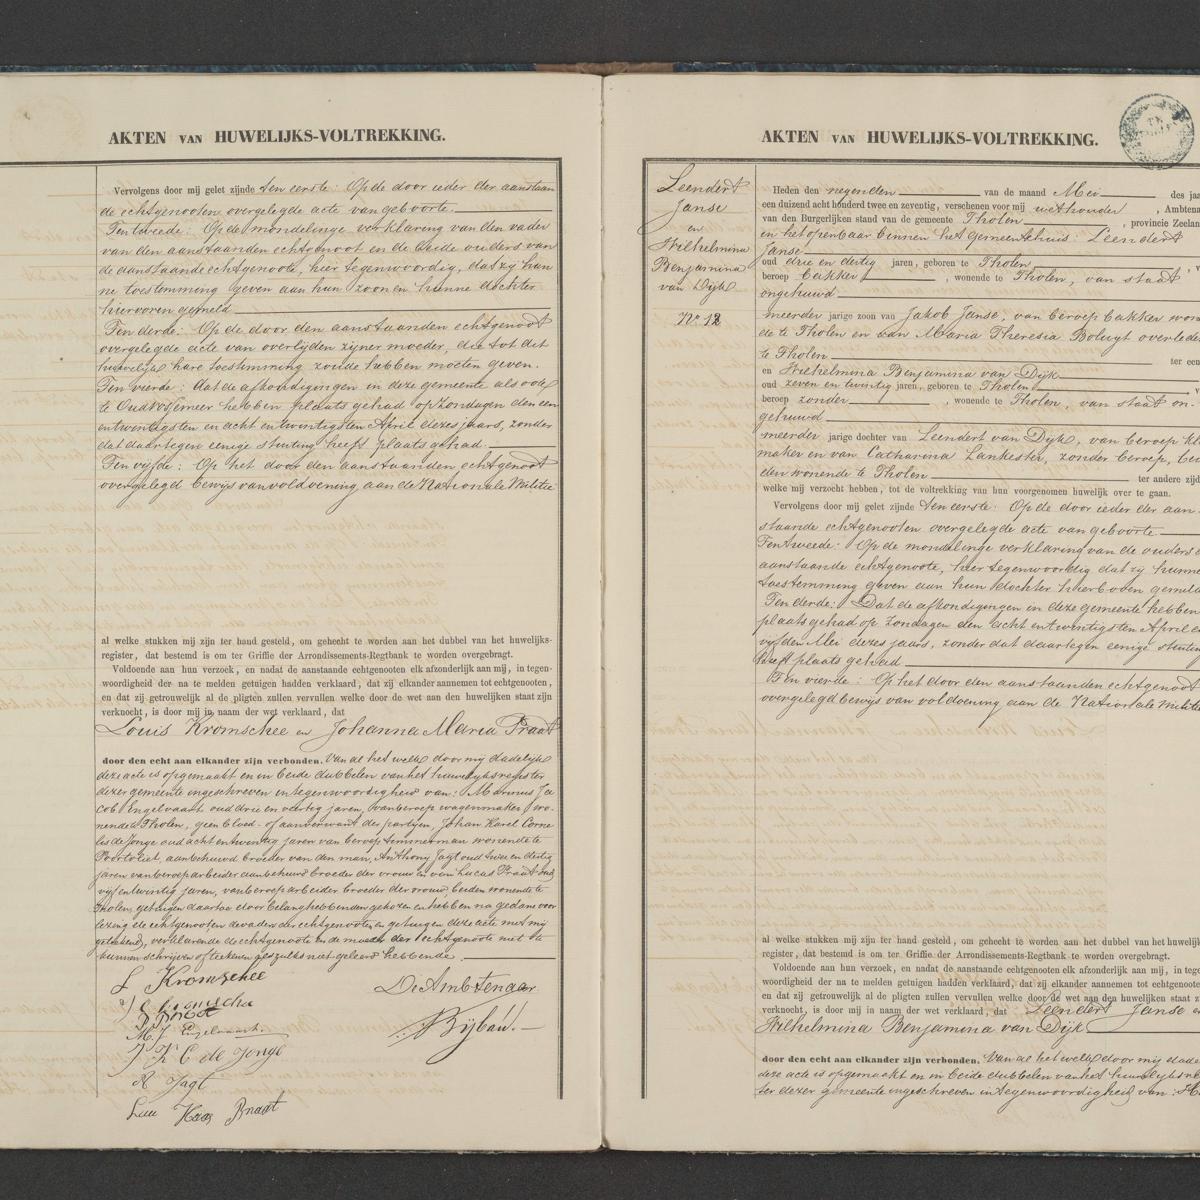 Civil registry of marriages, Tholen, 1872, records 11-12